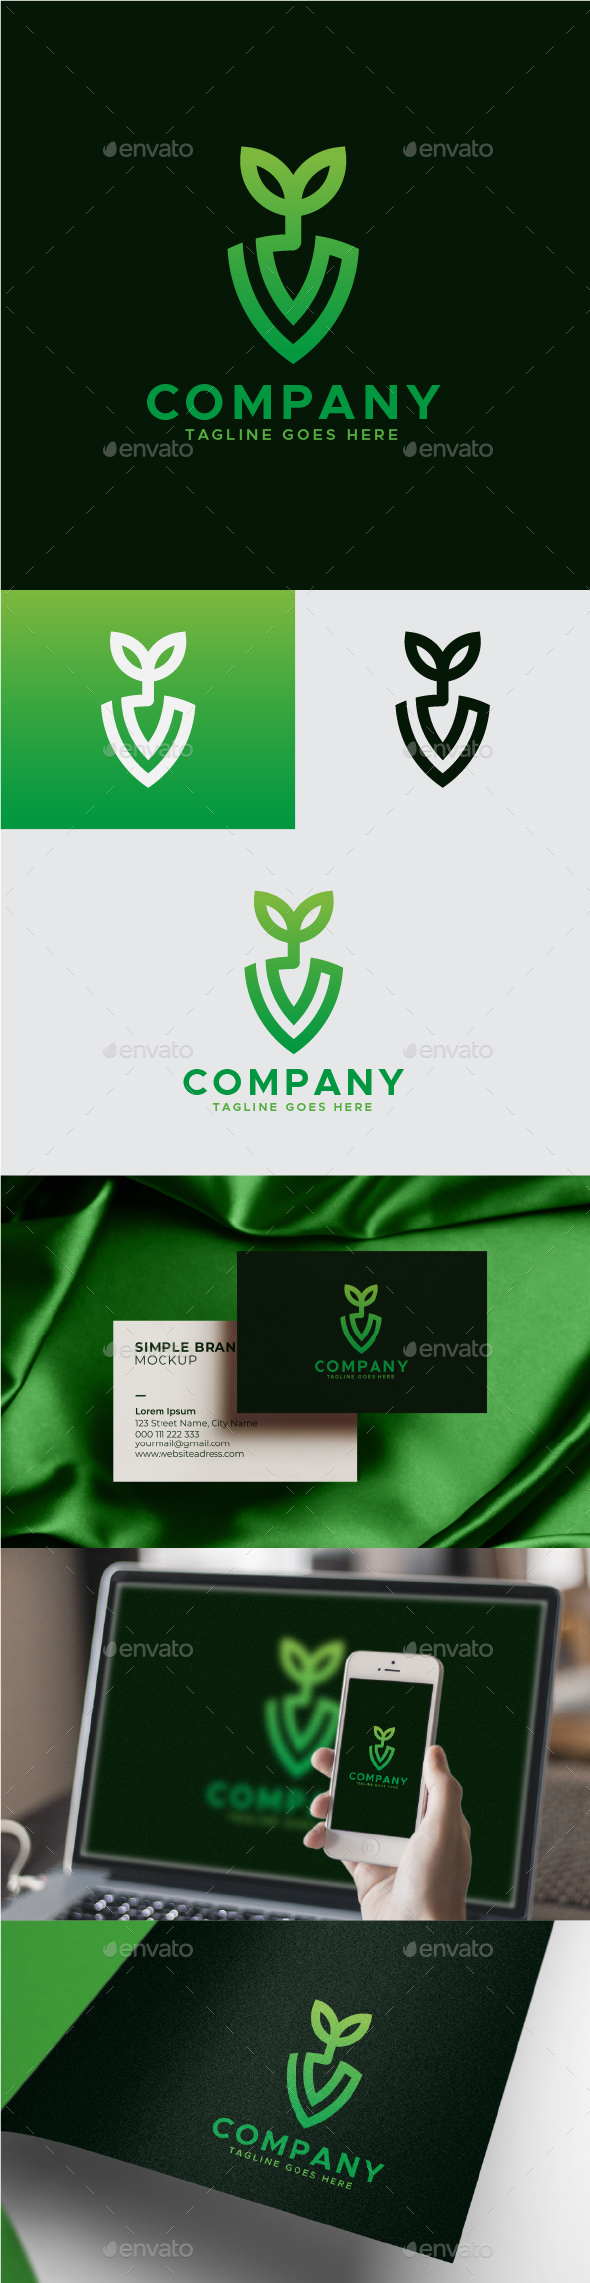 Shield gardening plant logo design template